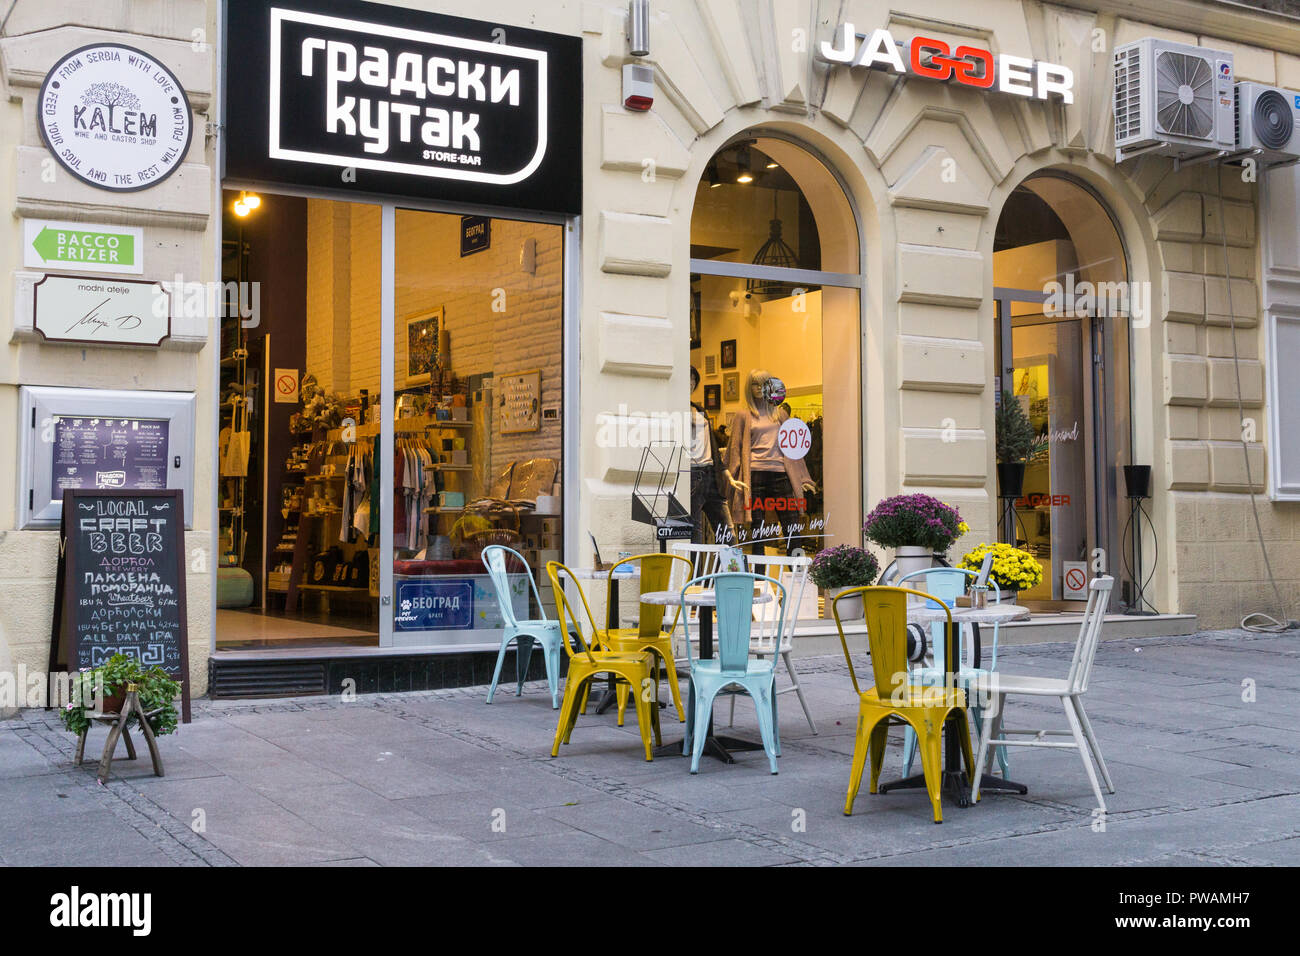 Colorfoul terrace of the small Belgrade cafe Gradski kutak (City Corner) on Cika Ljubina street. Serbia. Stock Photo